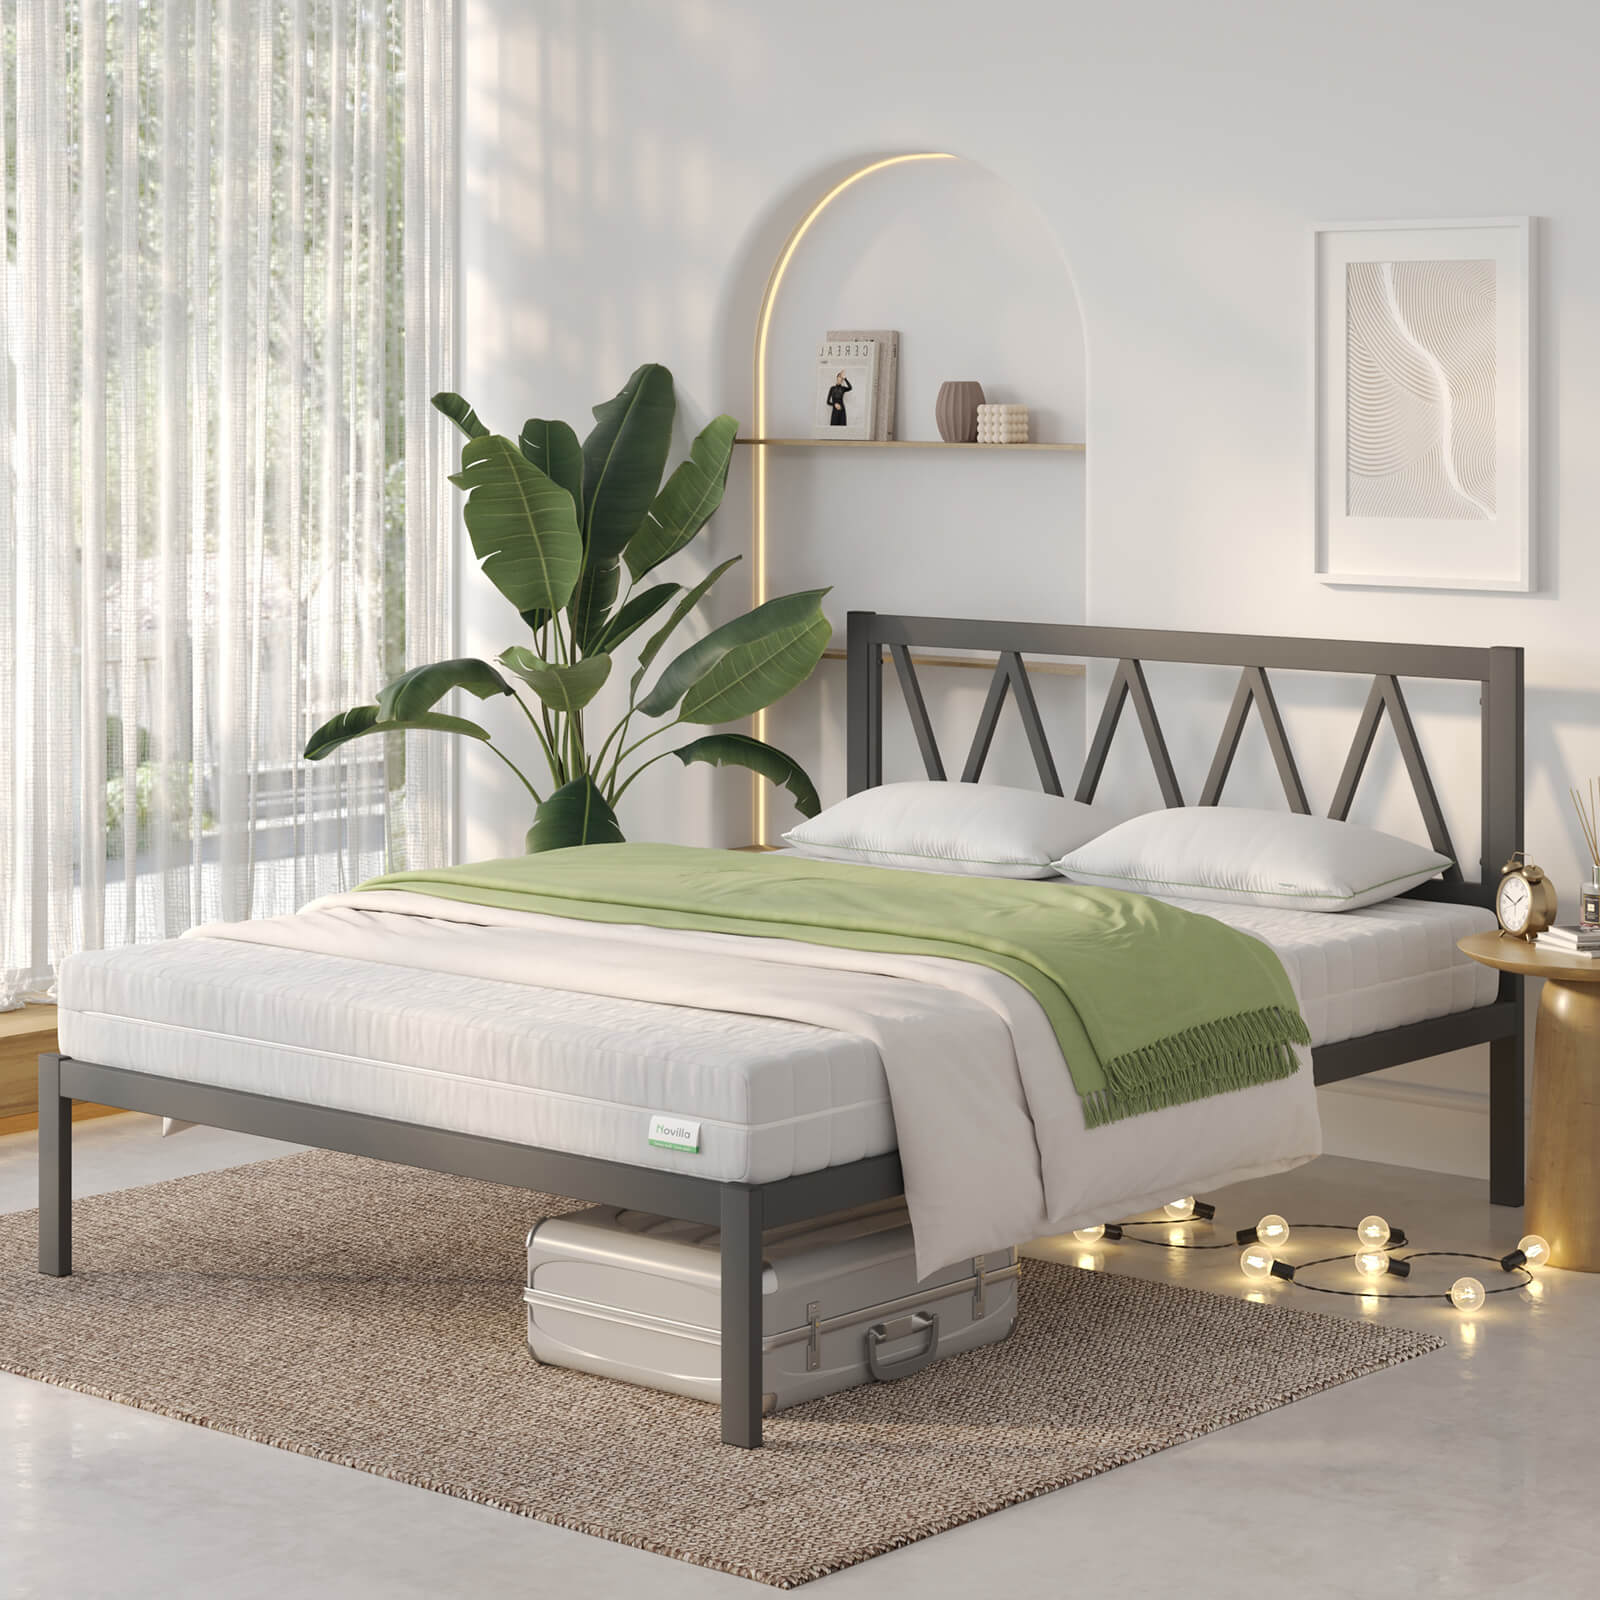 Durable Metal Bed Frames for Comfortable Sleep - 1